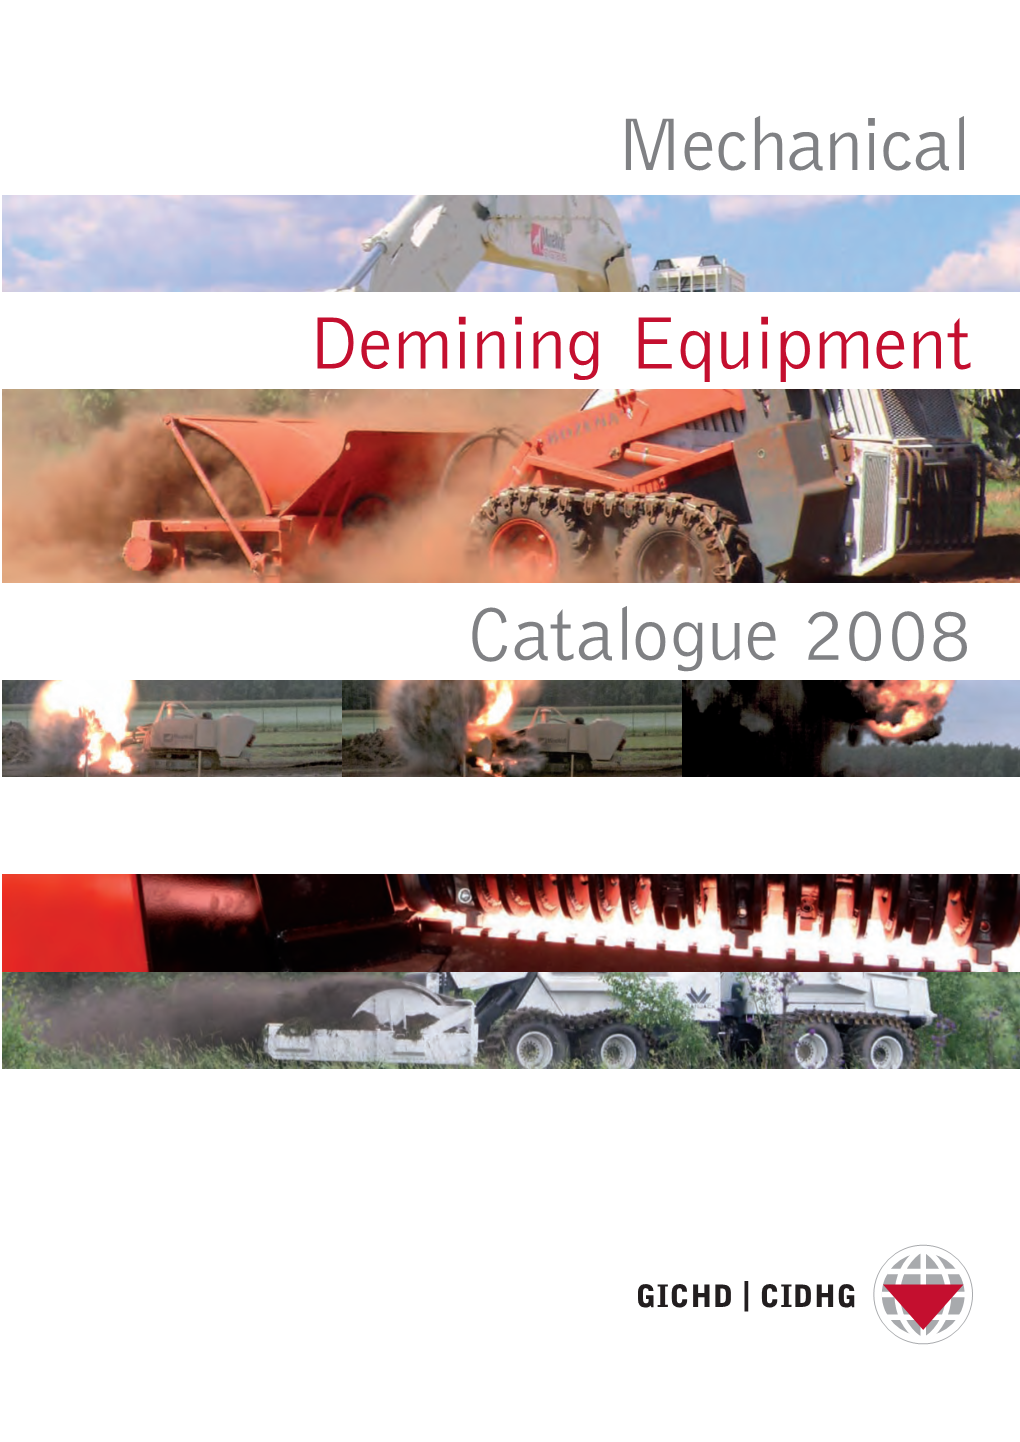 Mechanical Demining Equipment Catalogue 2008, GICHD, Geneva, January 2008